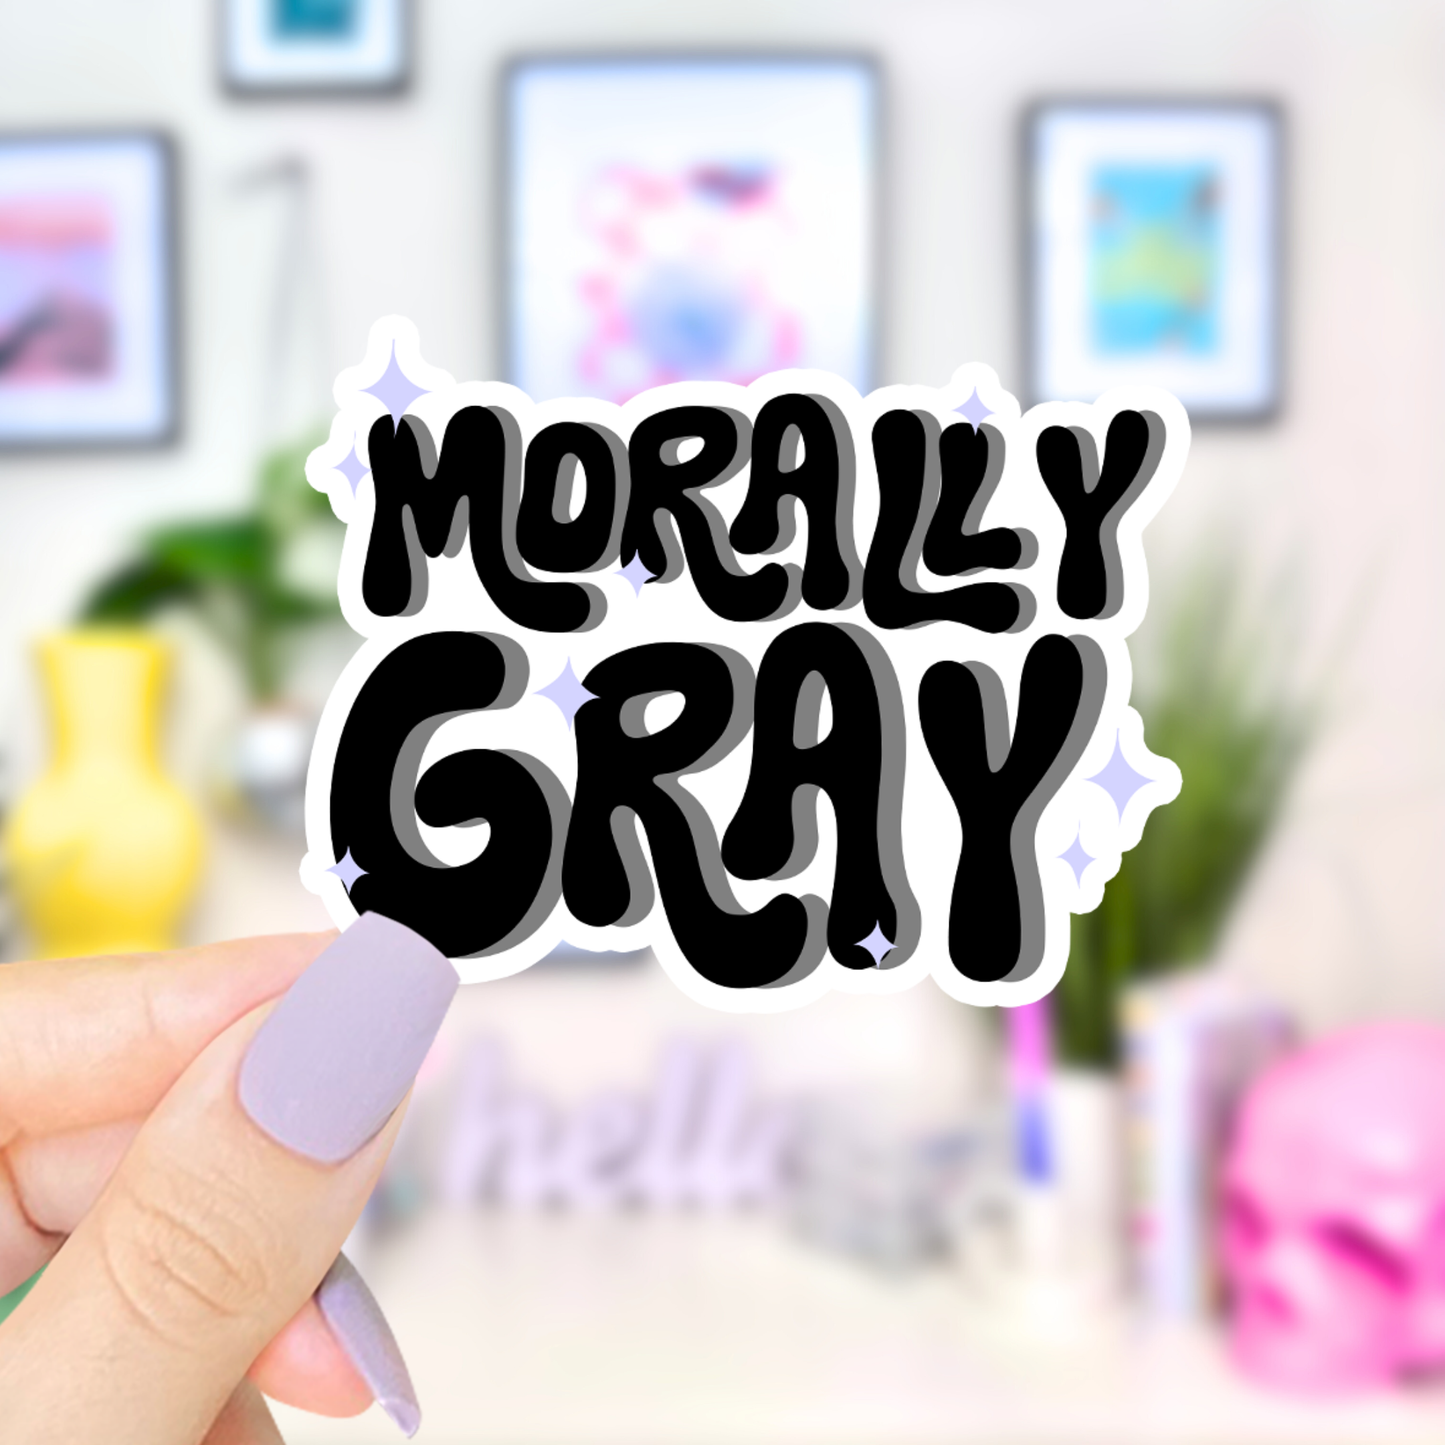 Morally Gray Kindle Sticker